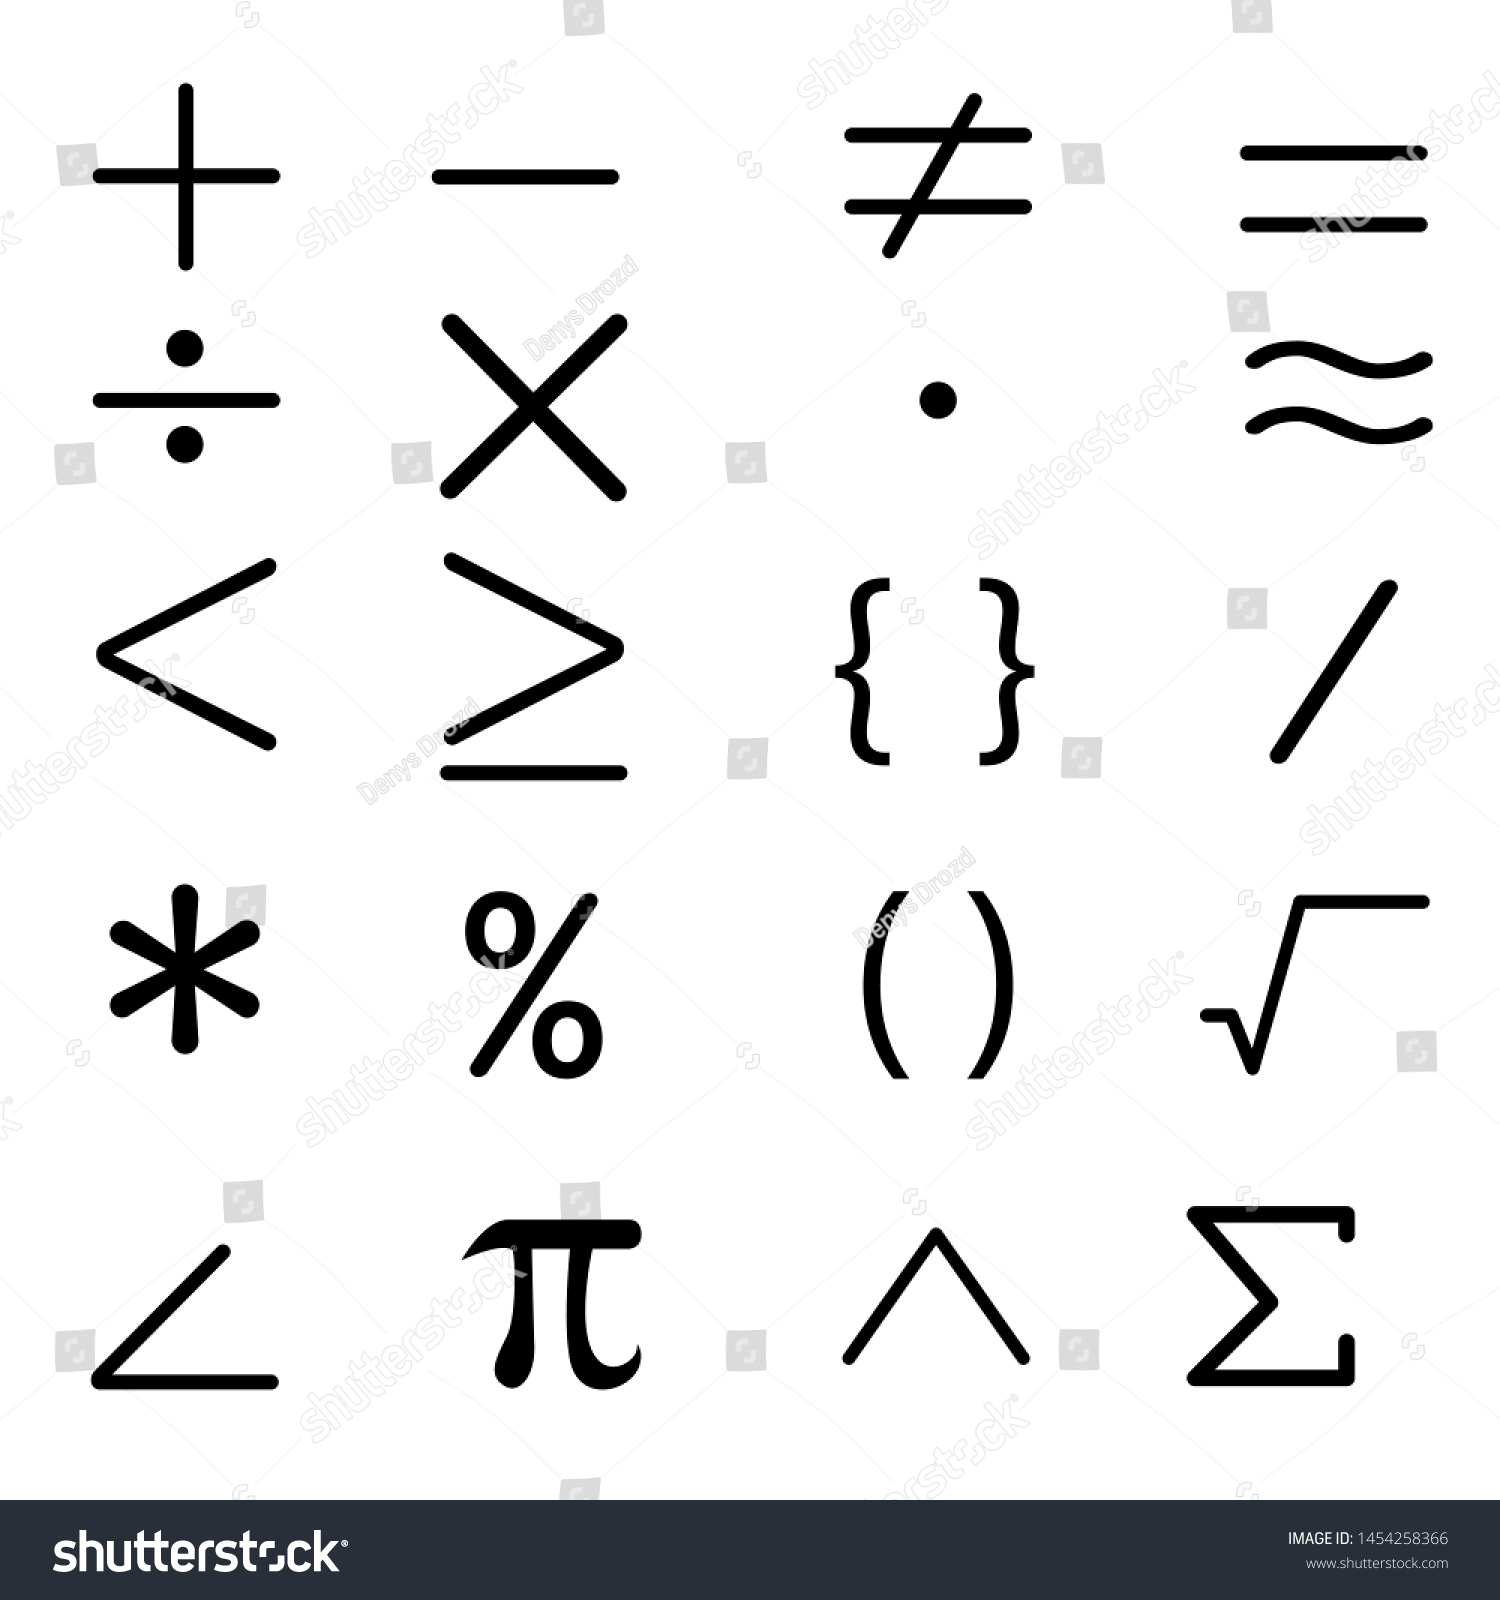 Math icon vector set. mathematical calculations symbol illustration collection. #1454258366